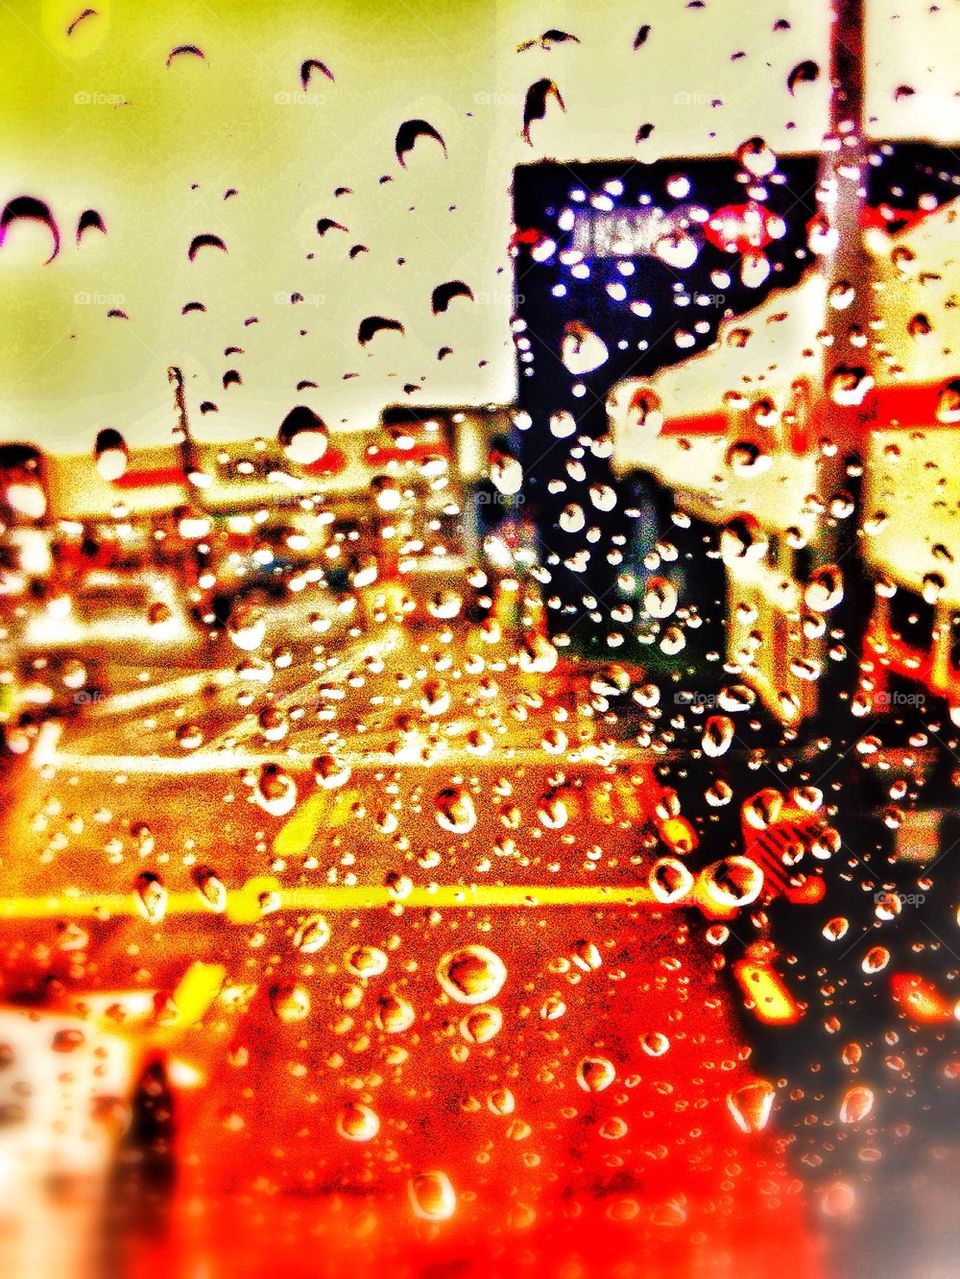 Rain drop abstract 1